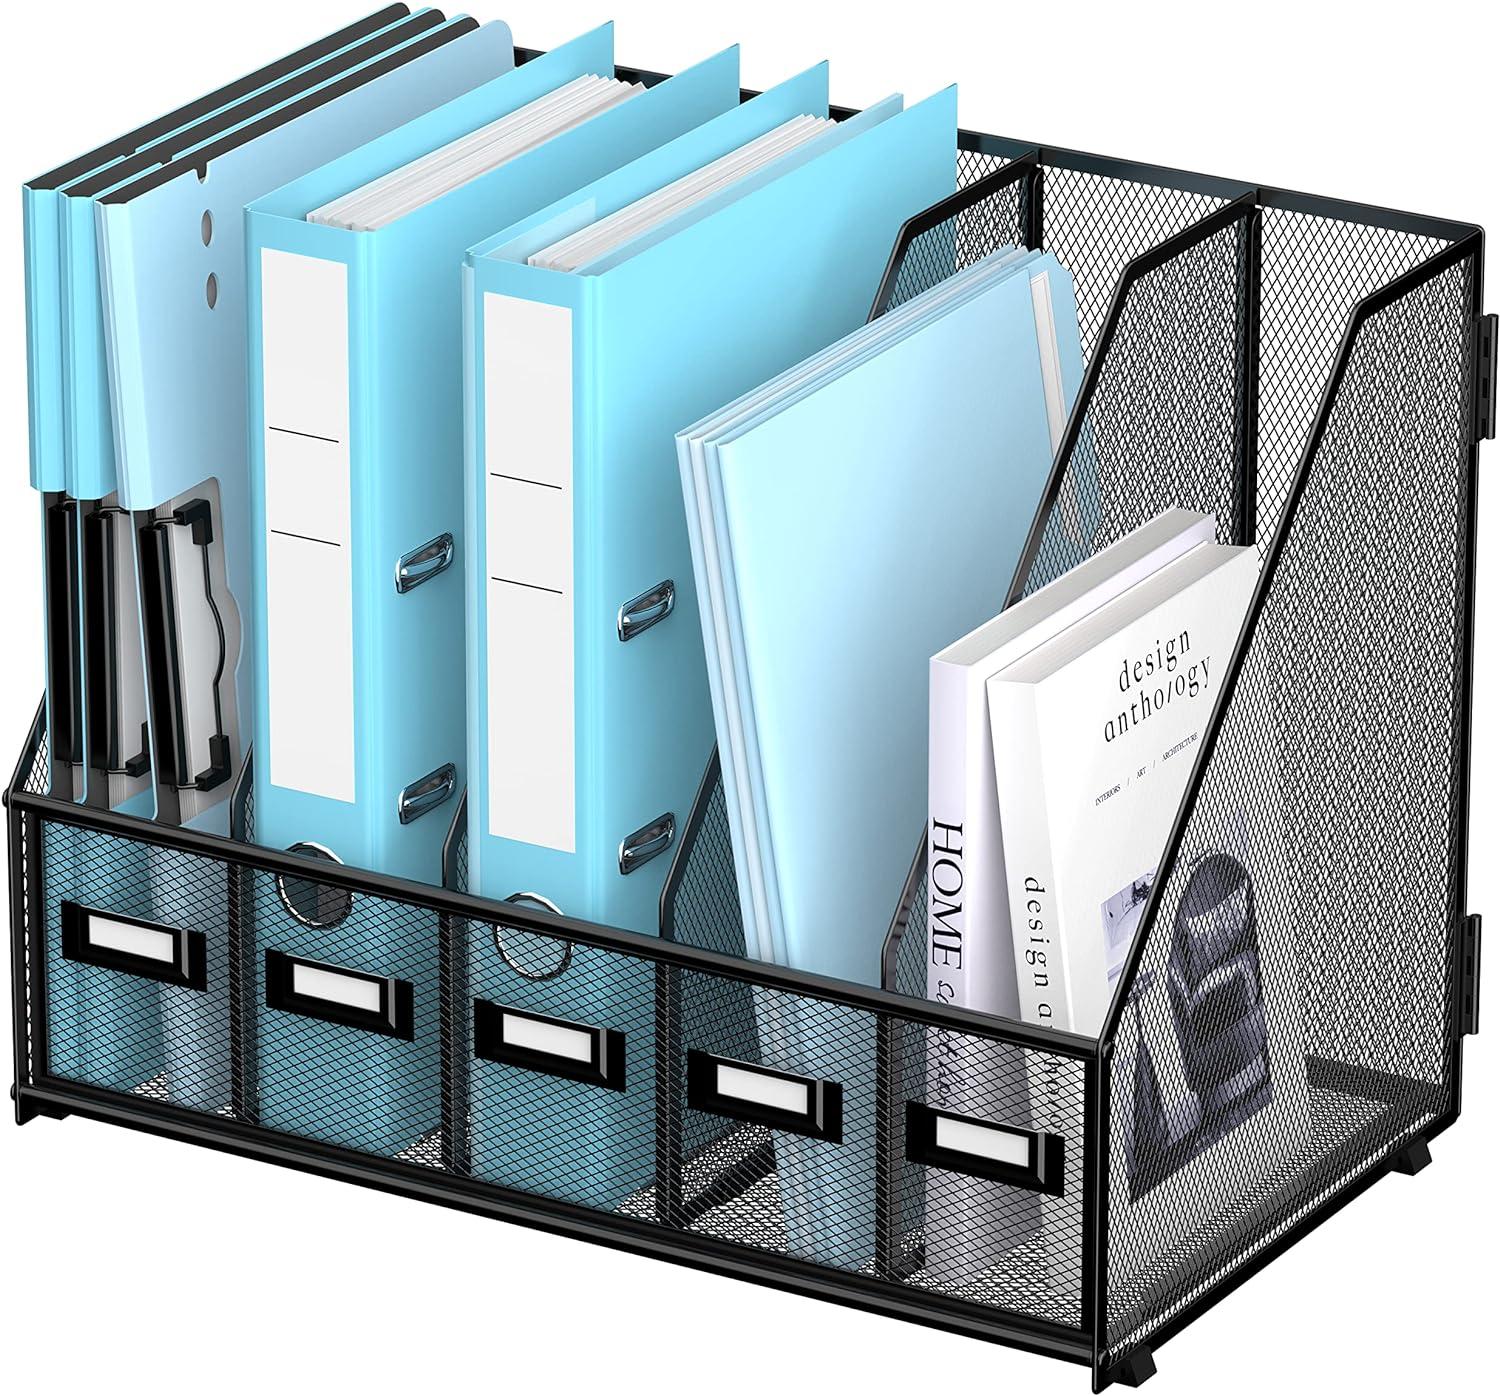 SUPEASY Desk Organizers Metal Desk Magazine File Holder With 5 Vertical Compartments Rack File Organizer For Office Desktop Home Workspace Black Plus